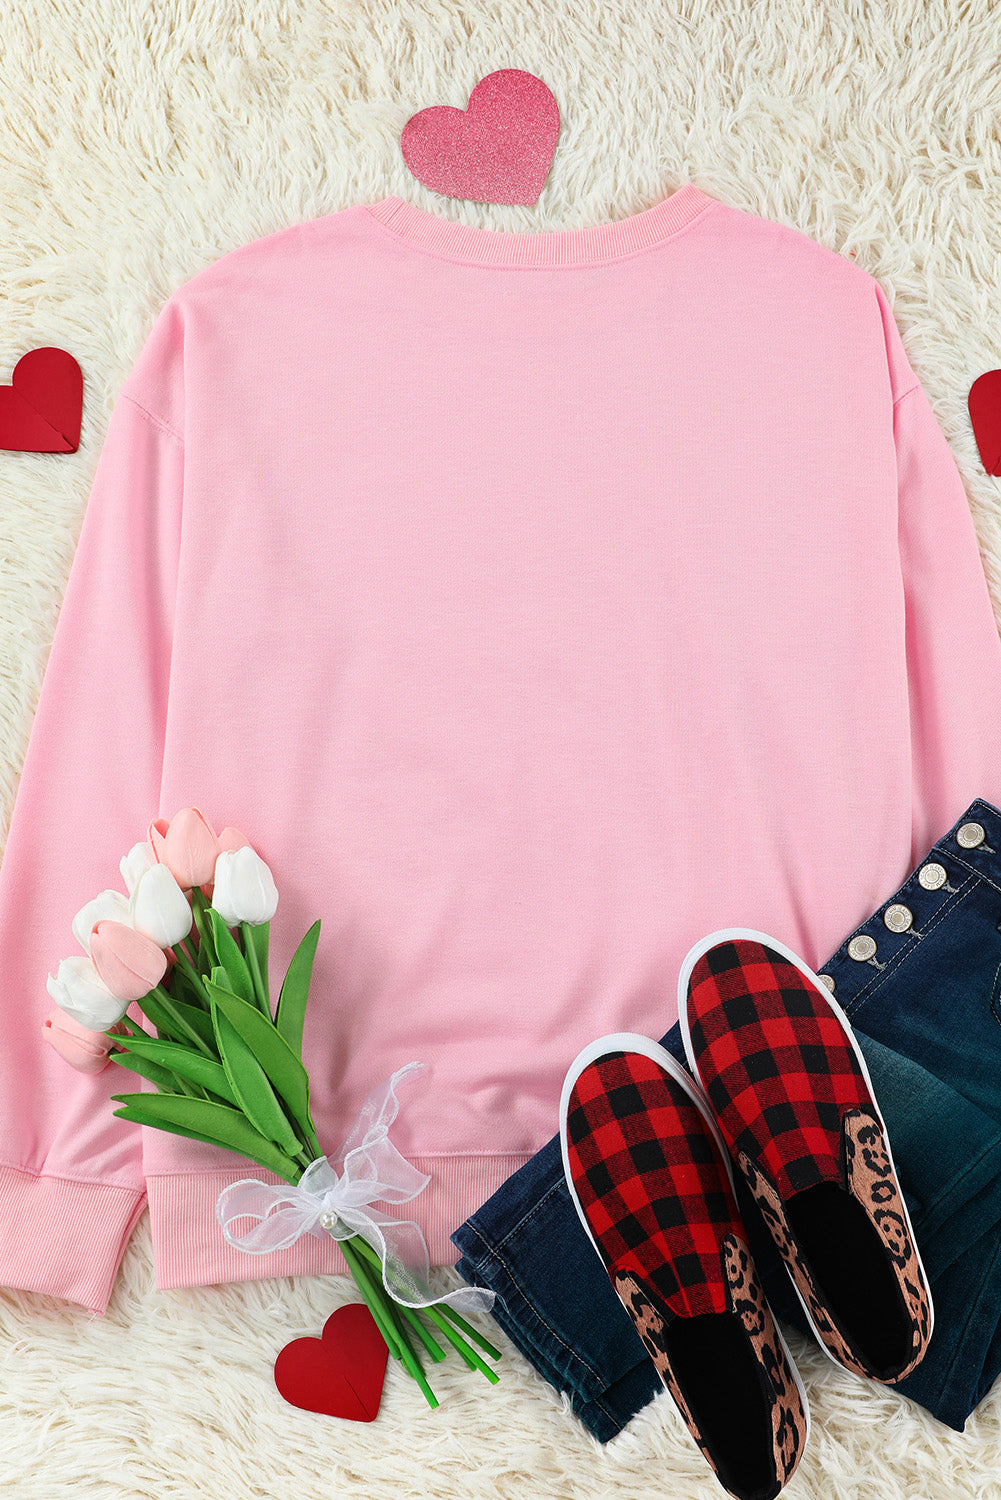 Pink BE MINE Graphic Pullover Sweatshirt